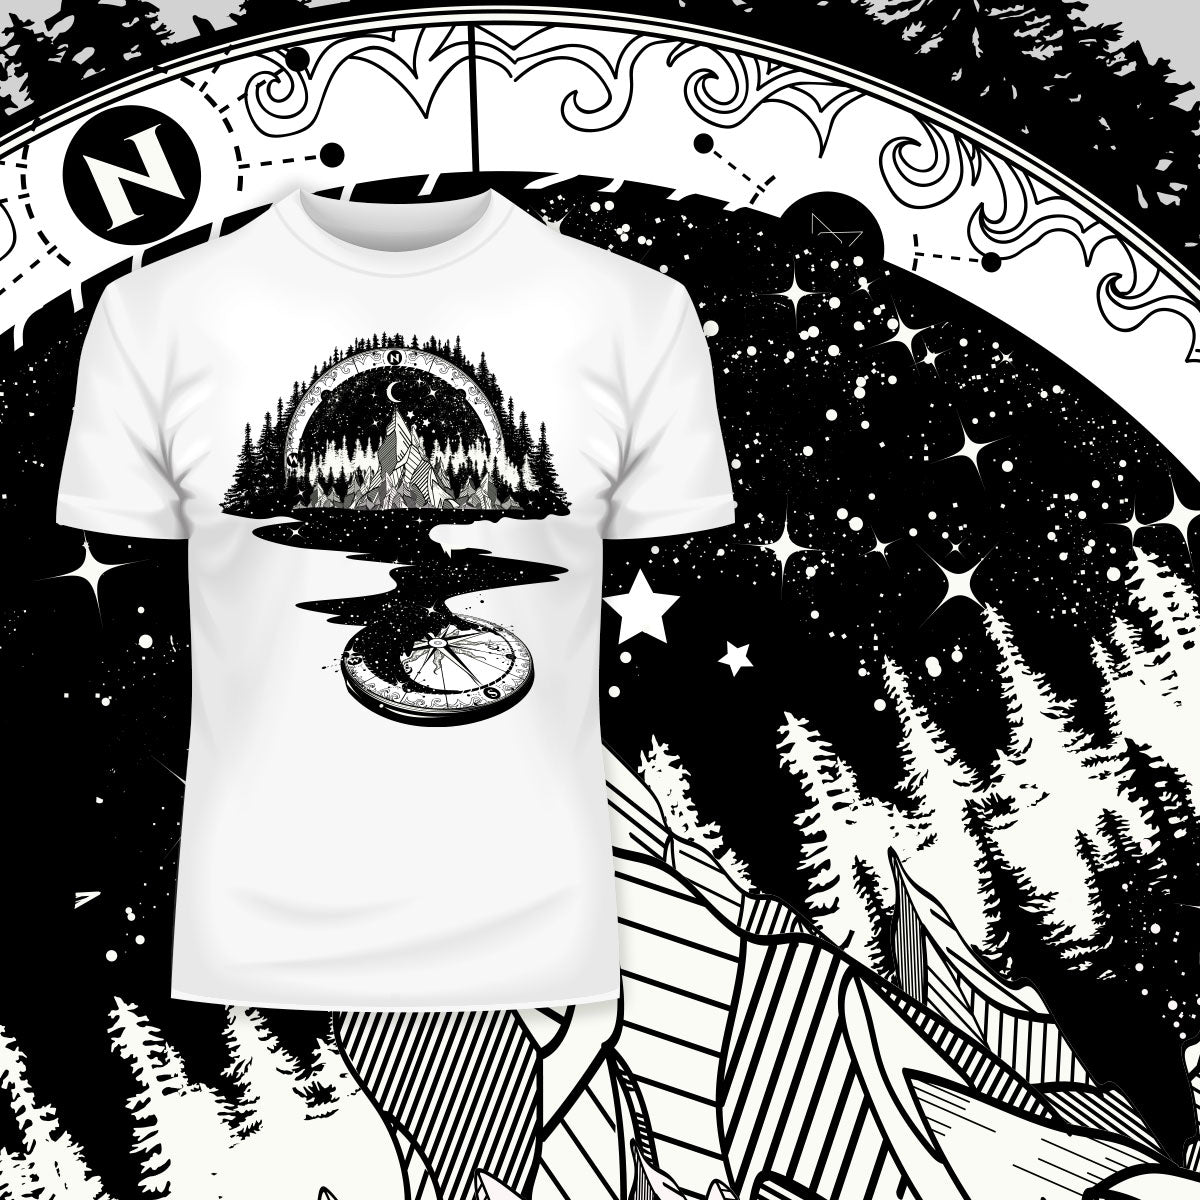 Surreal T-shirt of River Mountain & a Compass Magic Dream Tee - Kuzi Tees